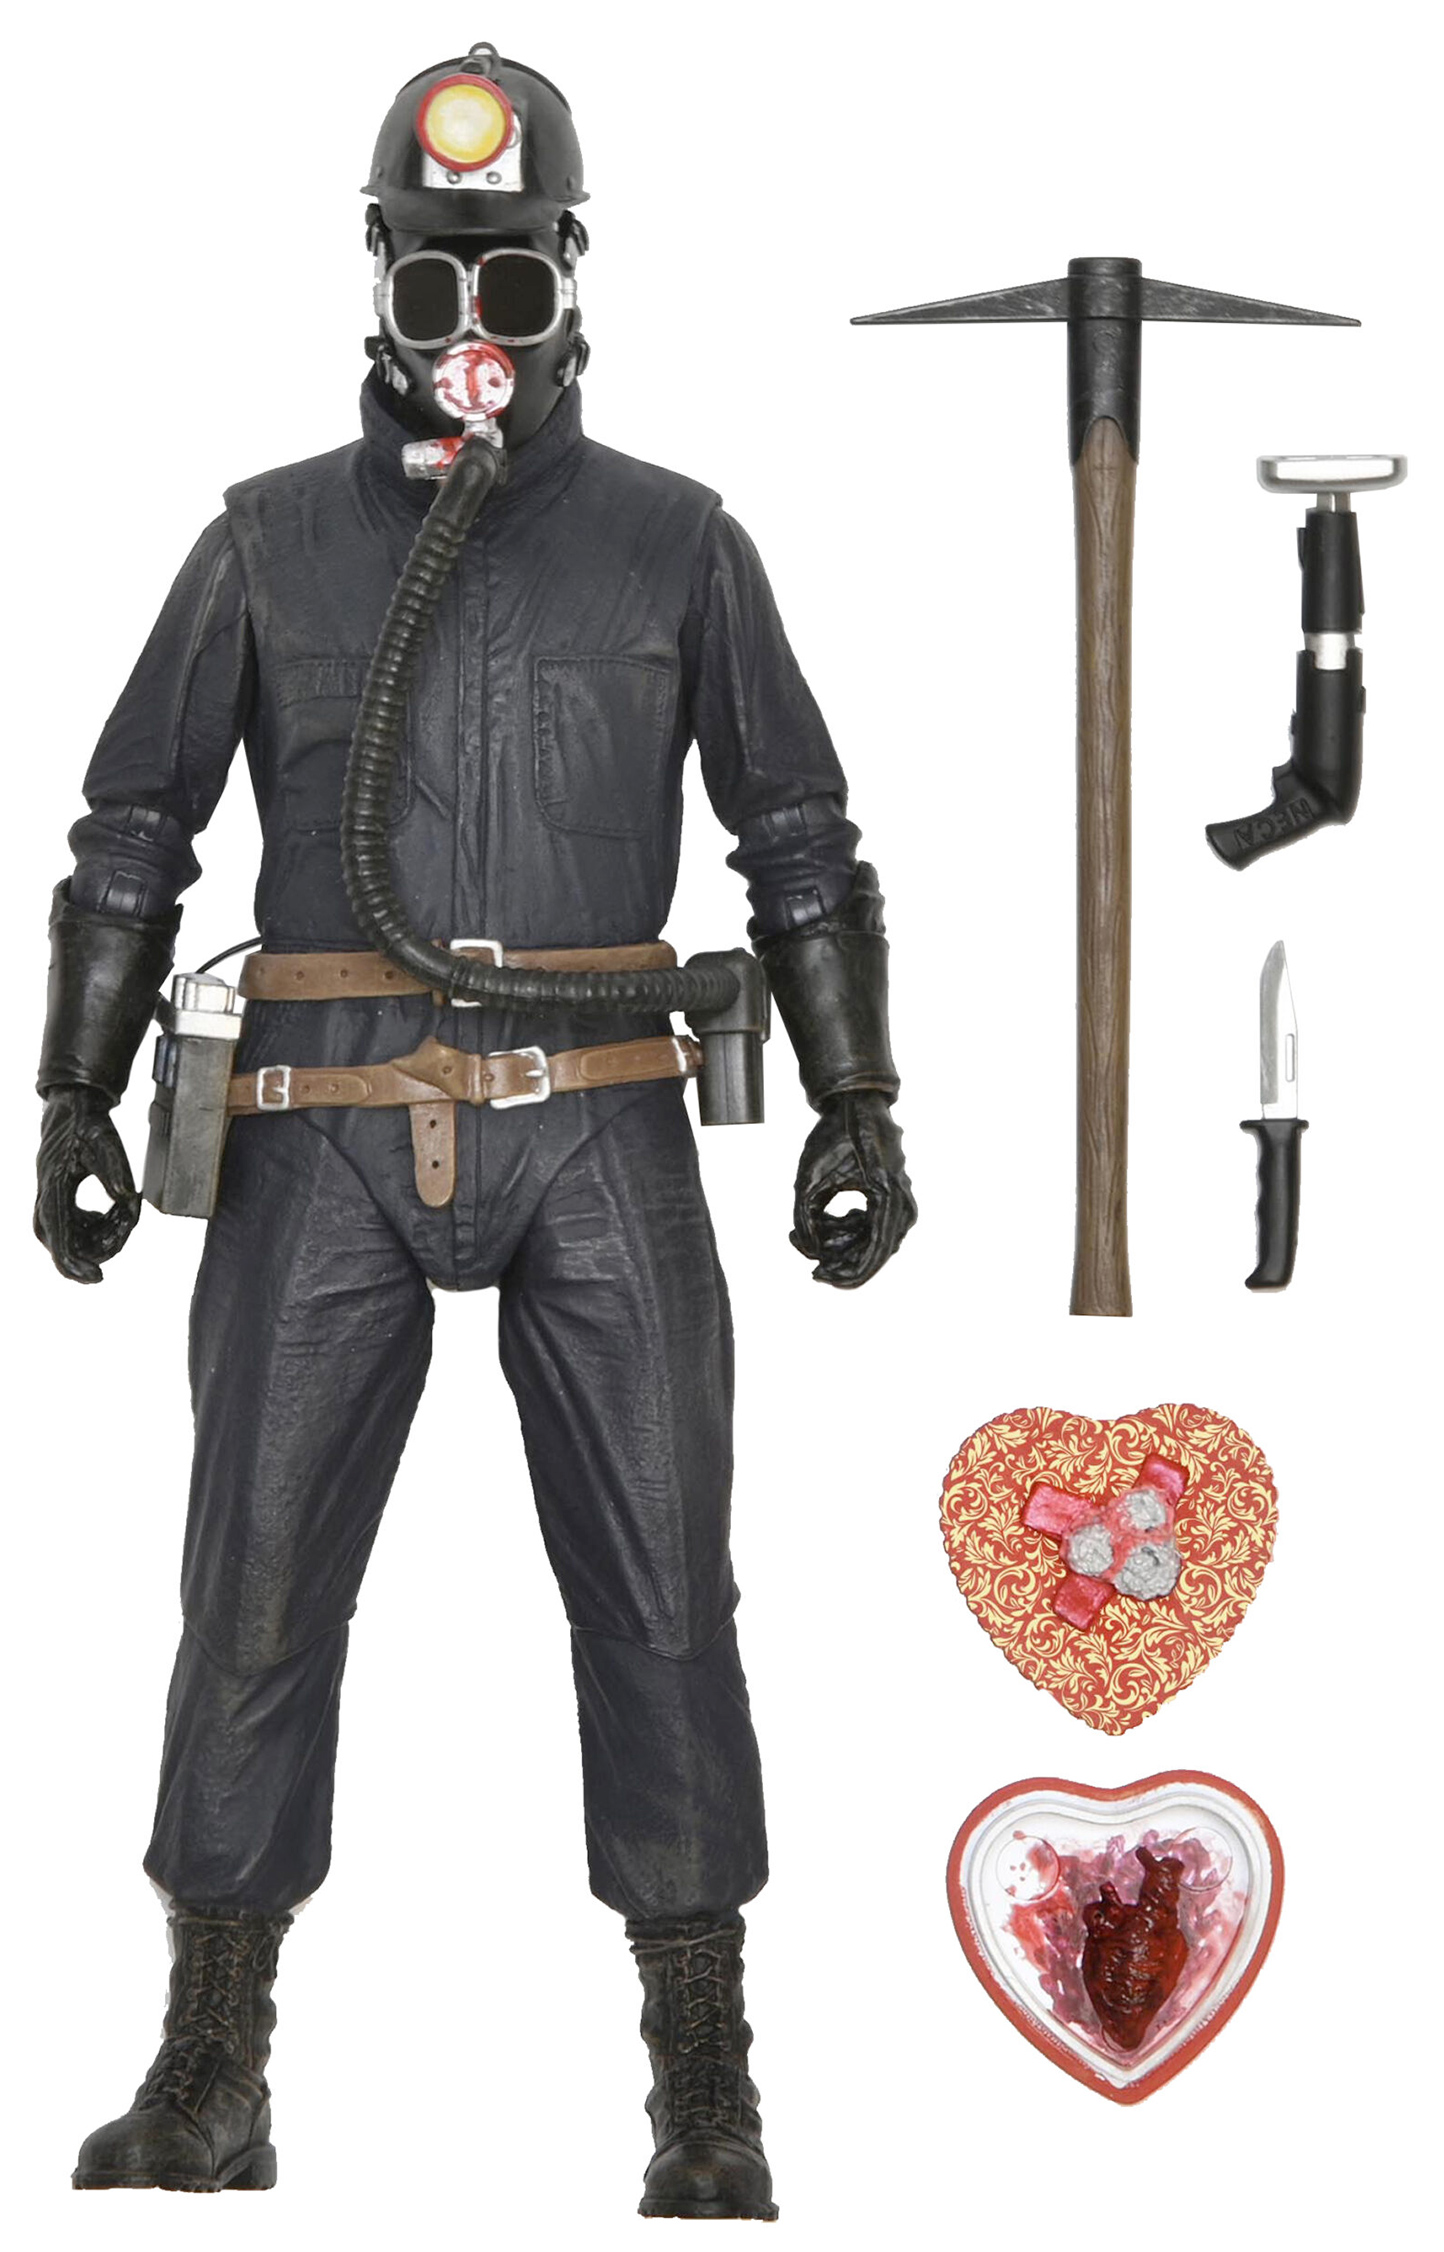 The Miner do Filme Slasher Dia dos Namorados Macabro (My Bloody Valentine) - Action Figure Neca Ultimate